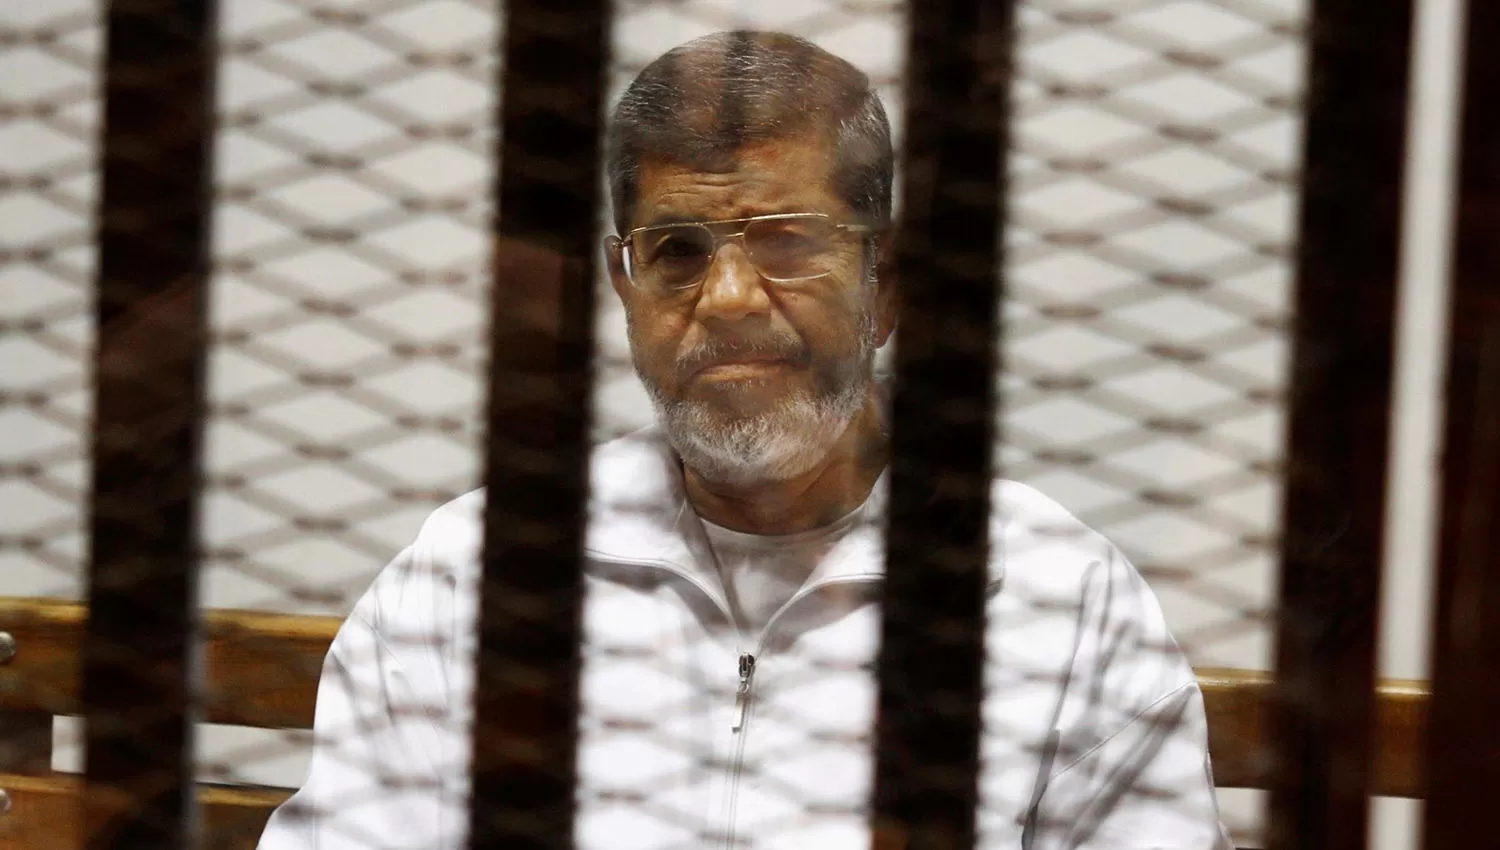 El ex presidente de Egipto Mohamed Morsi murió mientras era juzgado